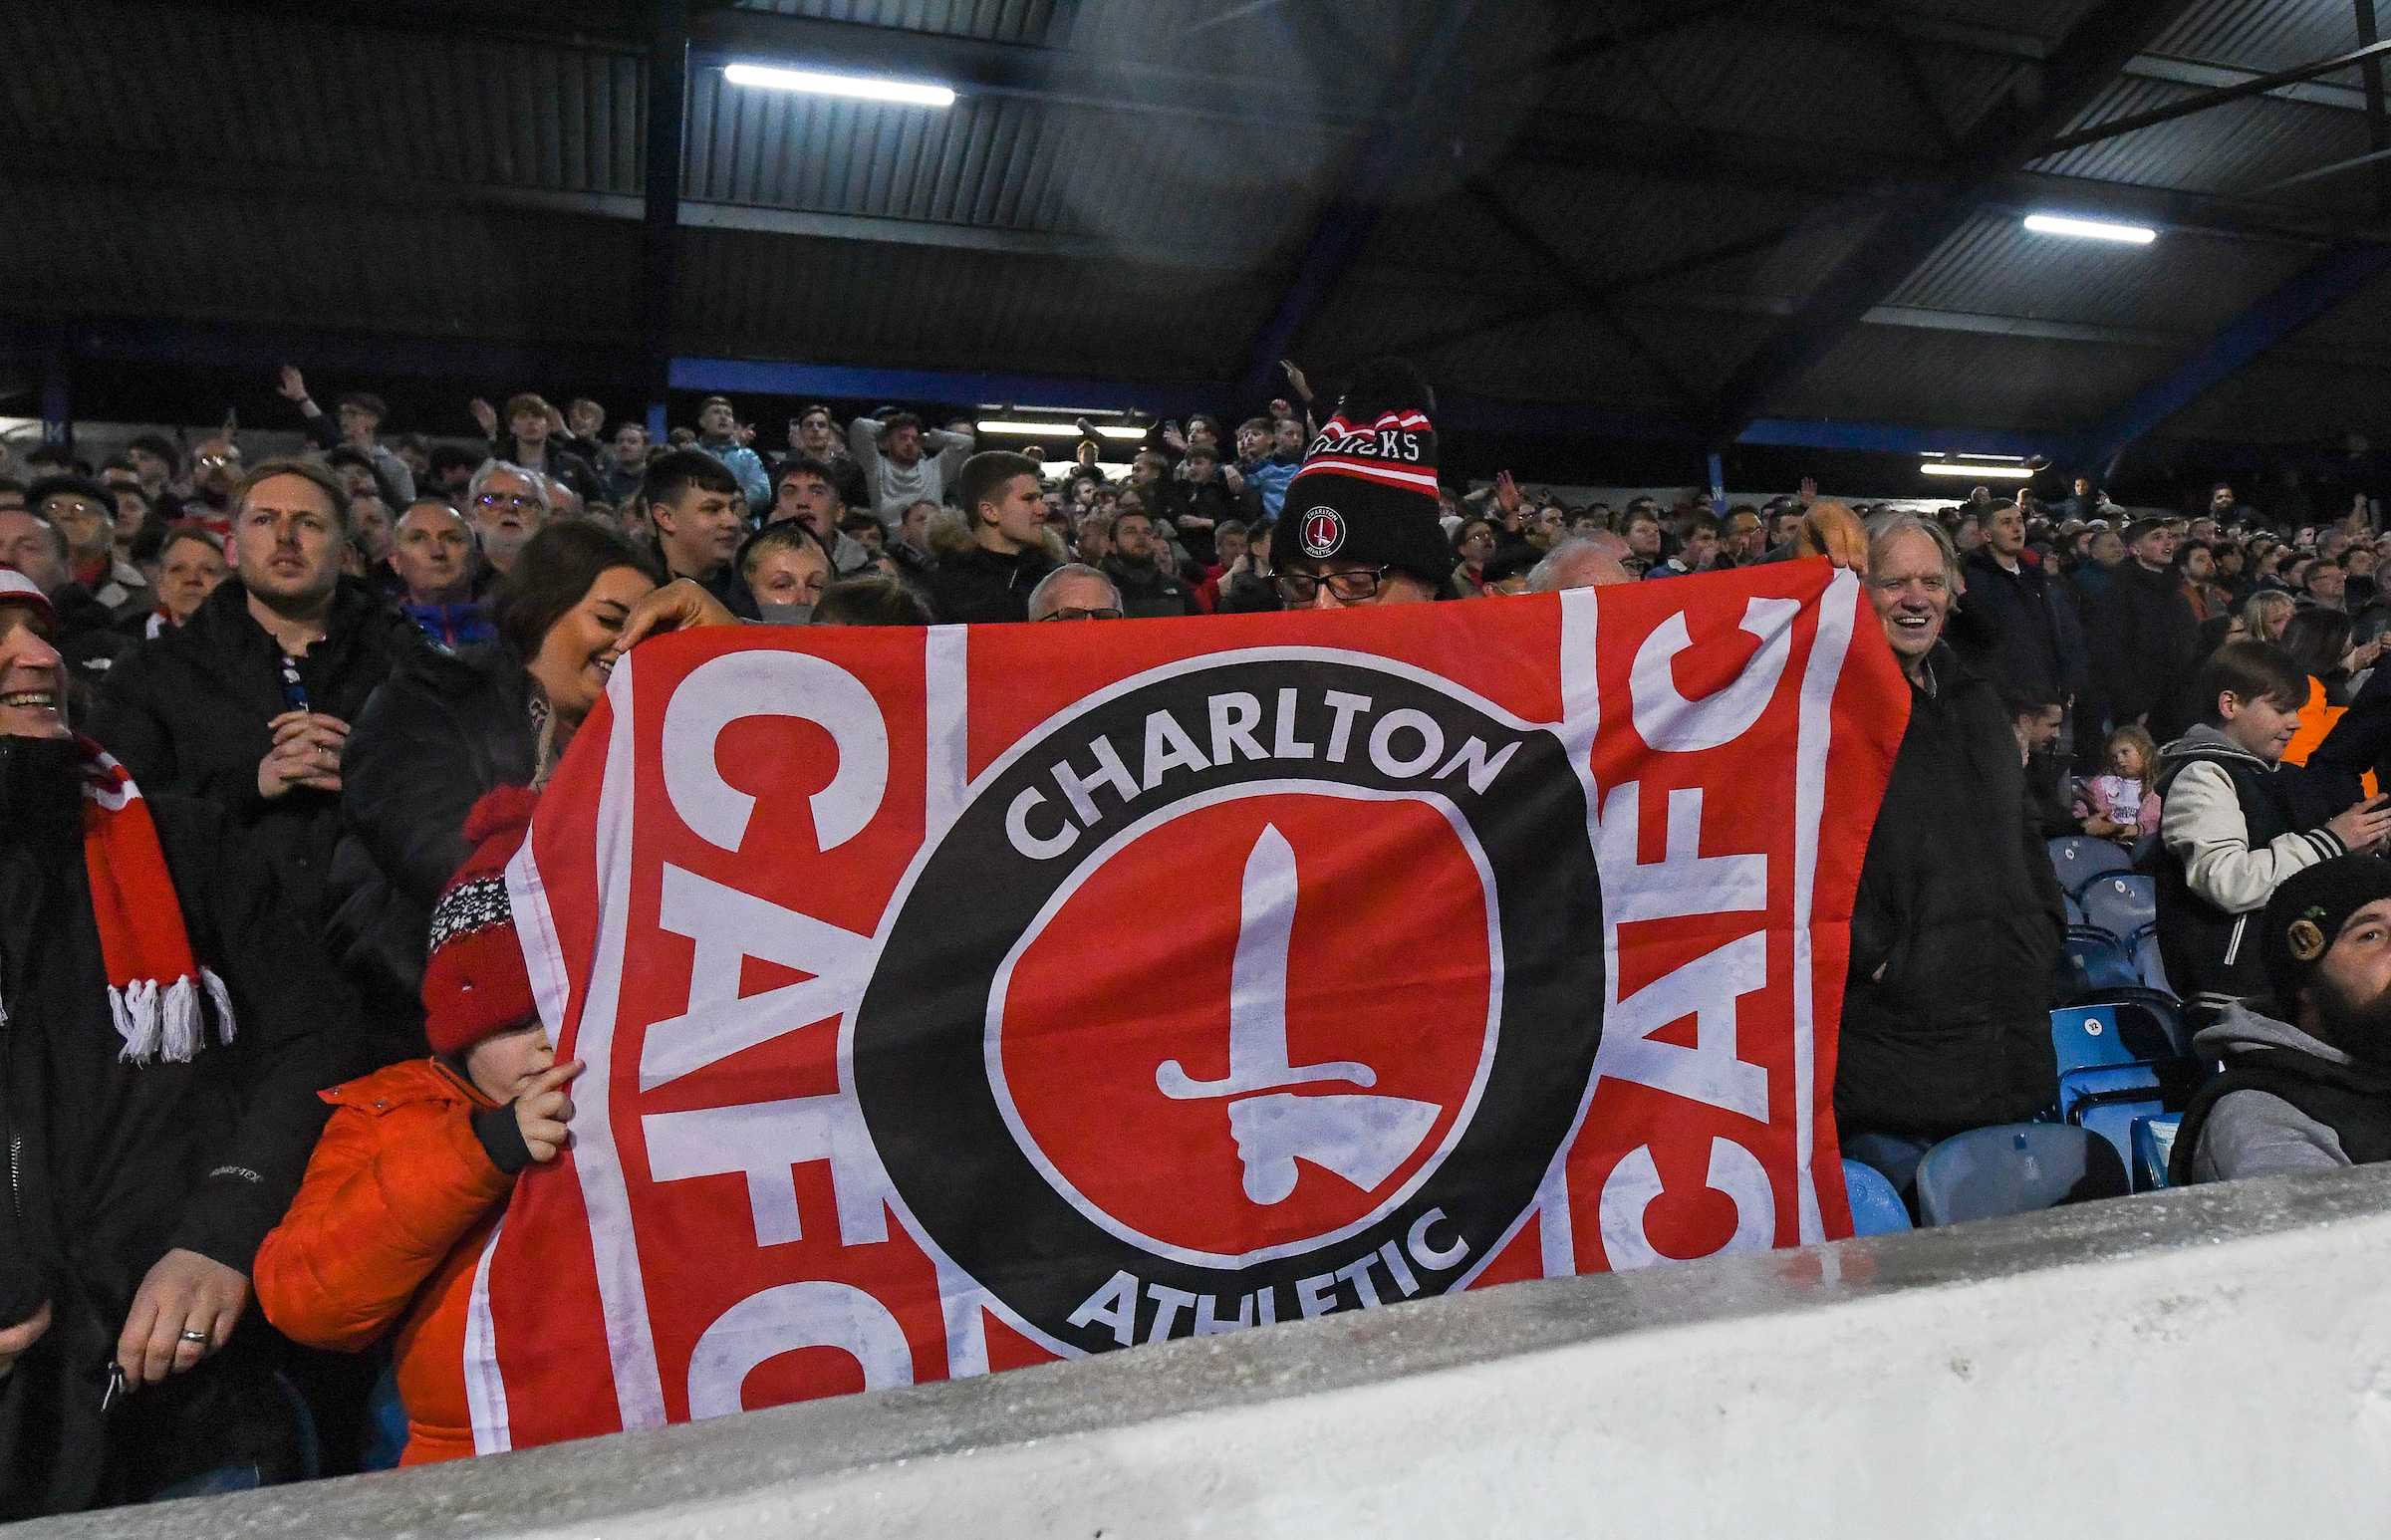 Charlton fans celebrate at Portsmouth